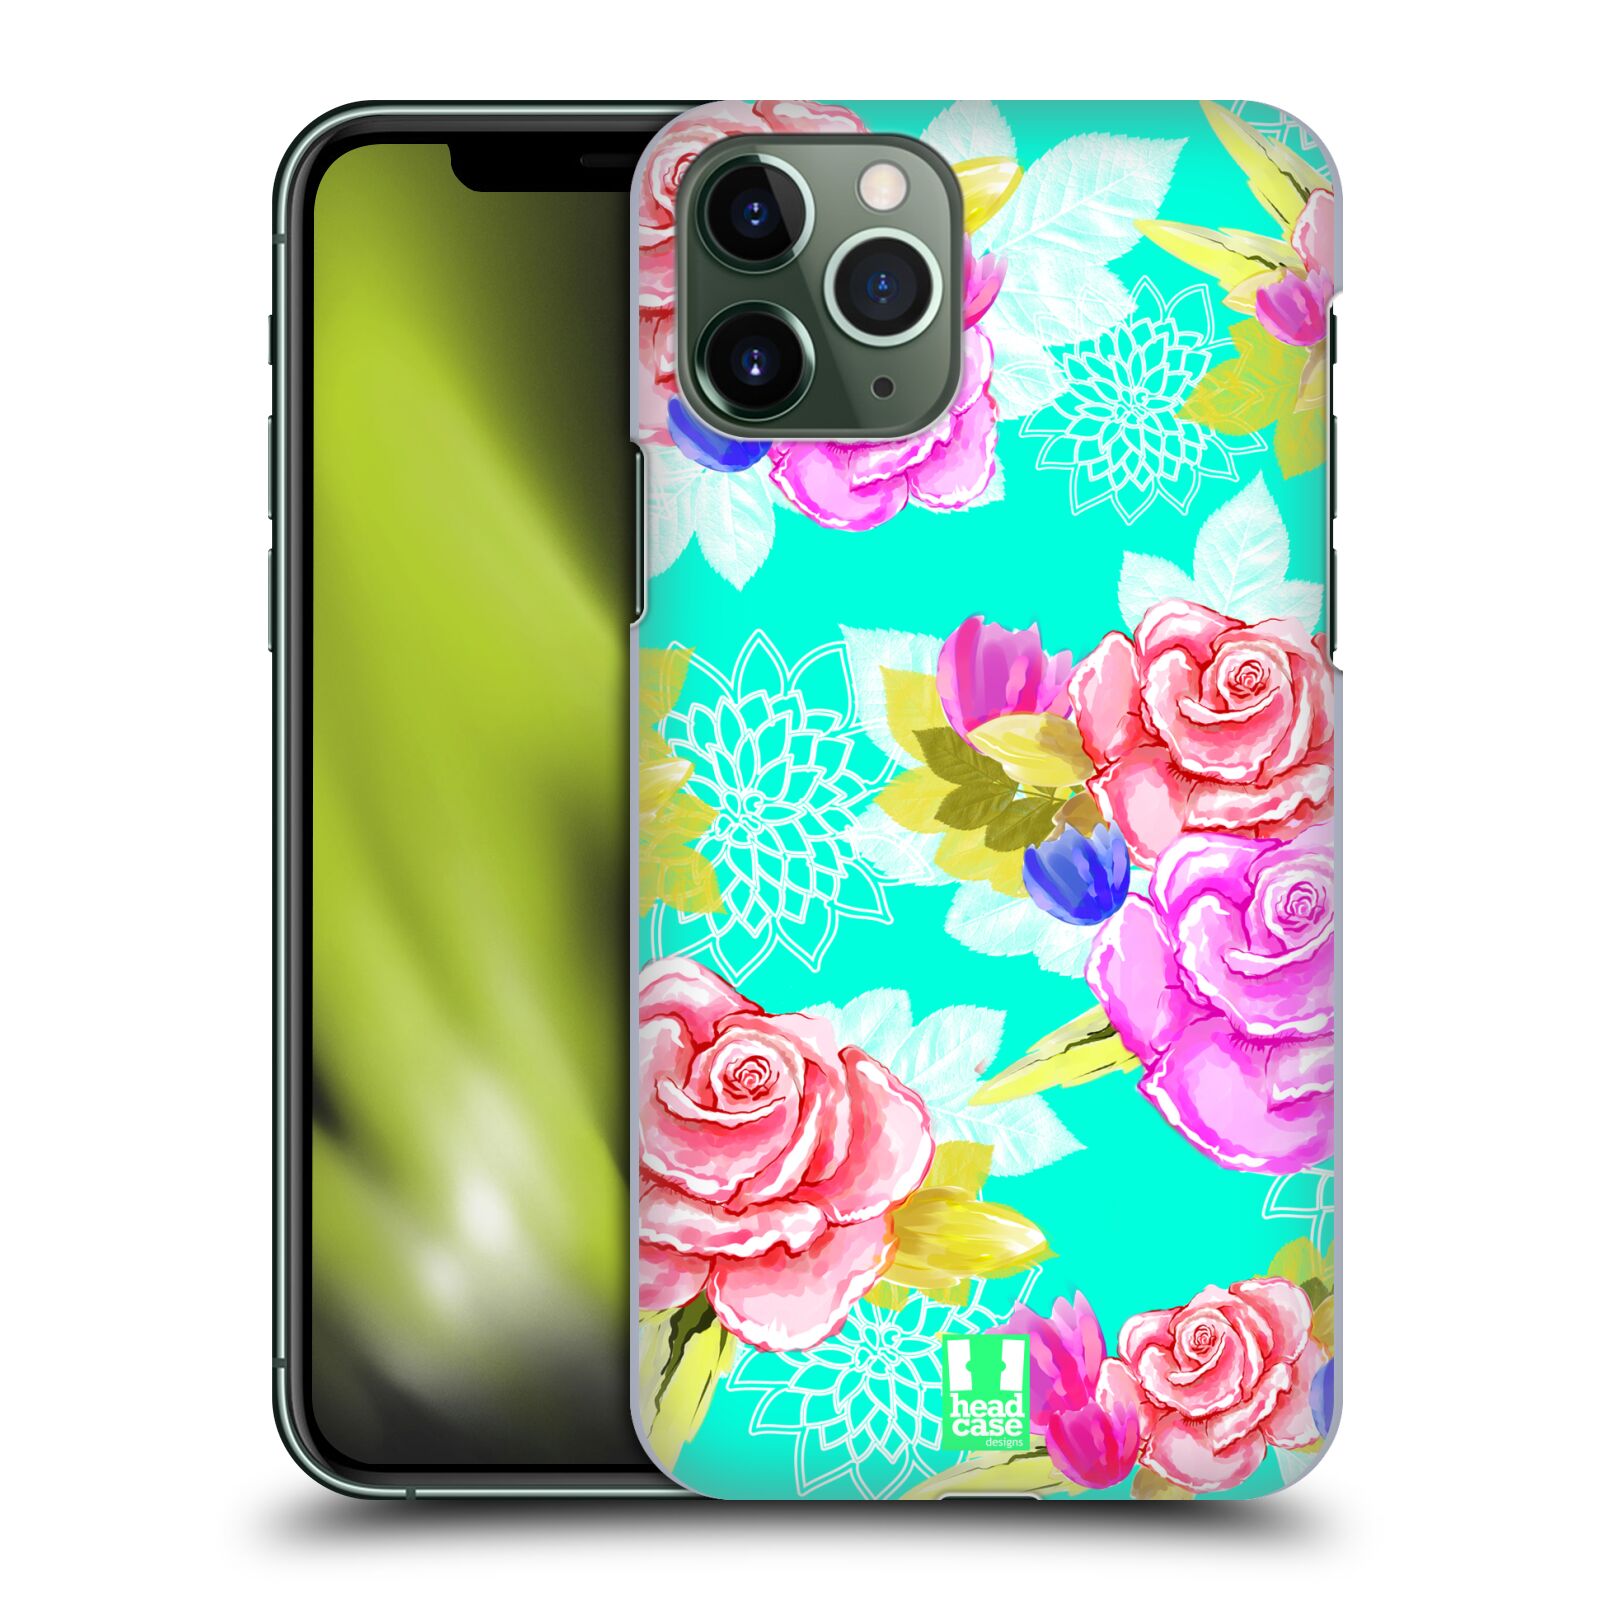 Pouzdro na mobil Apple Iphone 11 PRO - HEAD CASE - vzor Malované květiny barevné AQUA MODRÁ